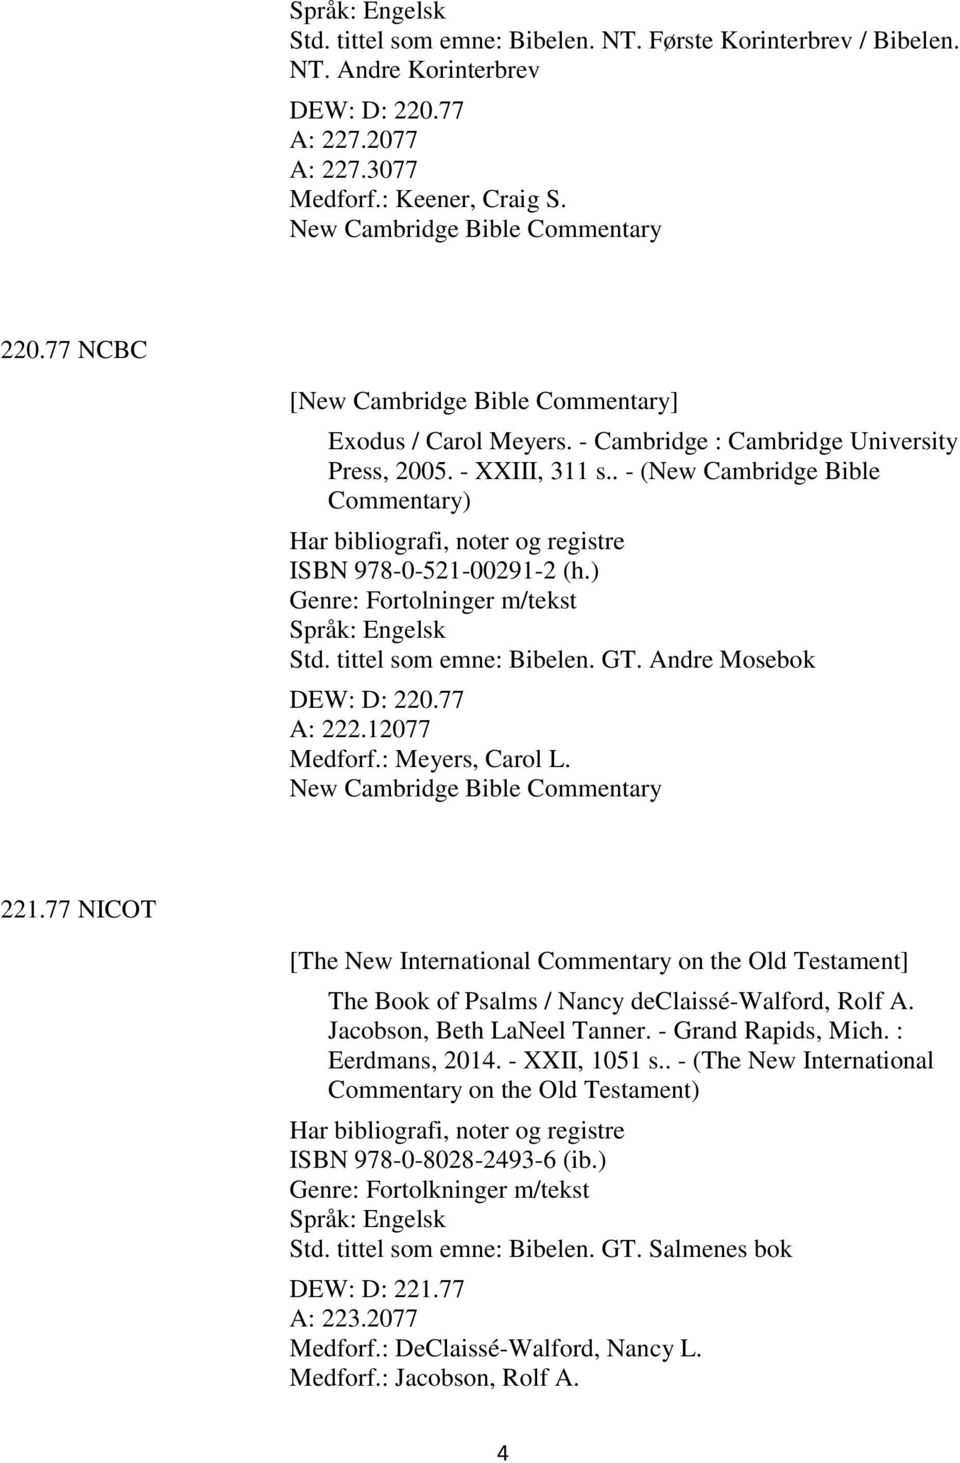 . - (New Cambridge Bible Commentary) Har bibliografi, noter og registre ISBN 978-0-521-00291-2 (h.) Genre: Fortolninger m/tekst Std. tittel som emne: Bibelen. GT. Andre Mosebok DEW: D: 220.77 A: 222.